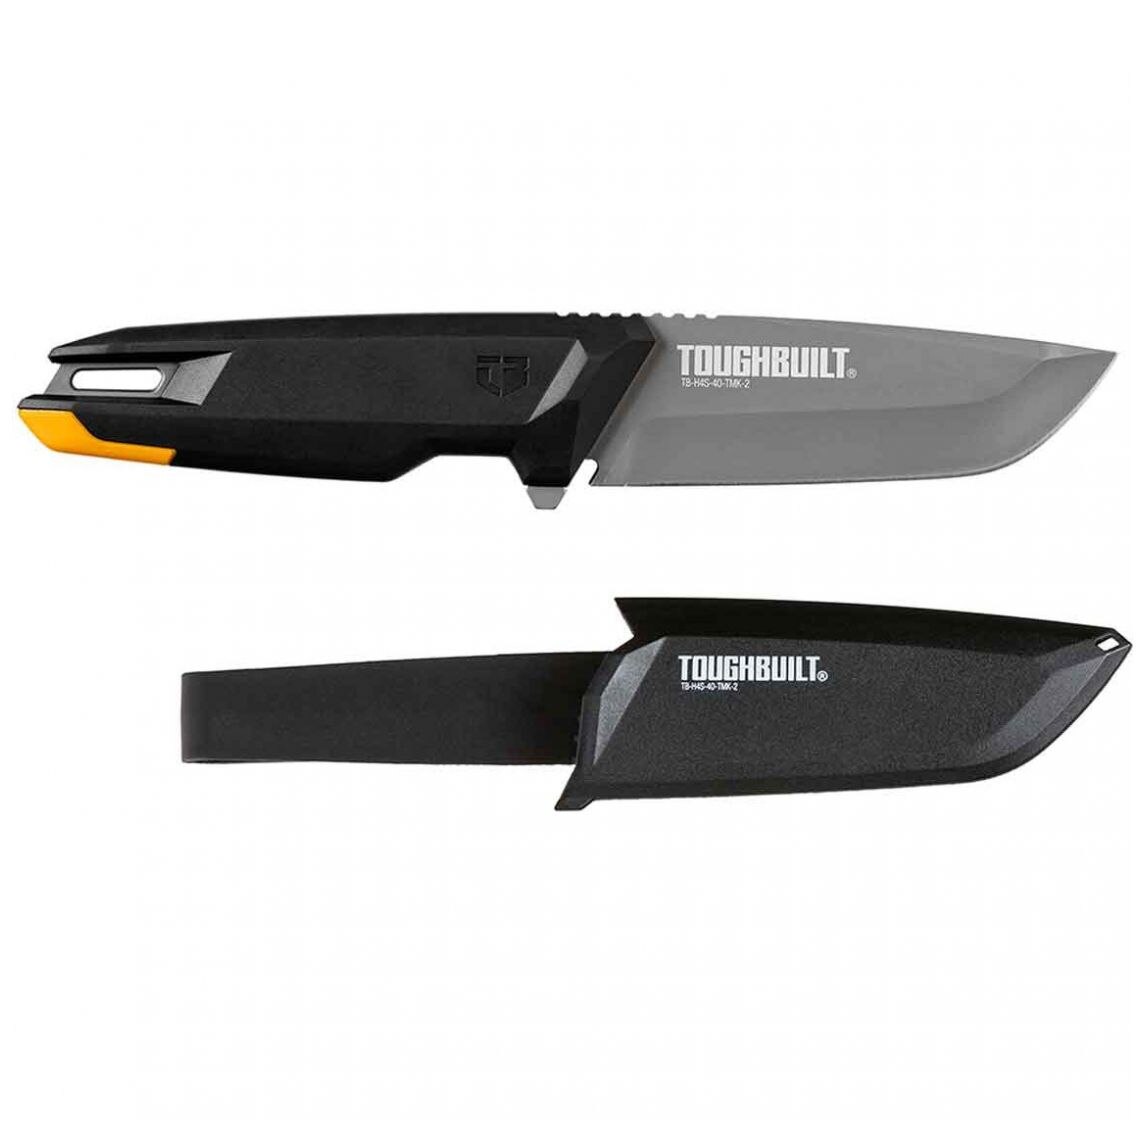 Cuchillo plegable inoxidable Hawkbill Toughbuilt